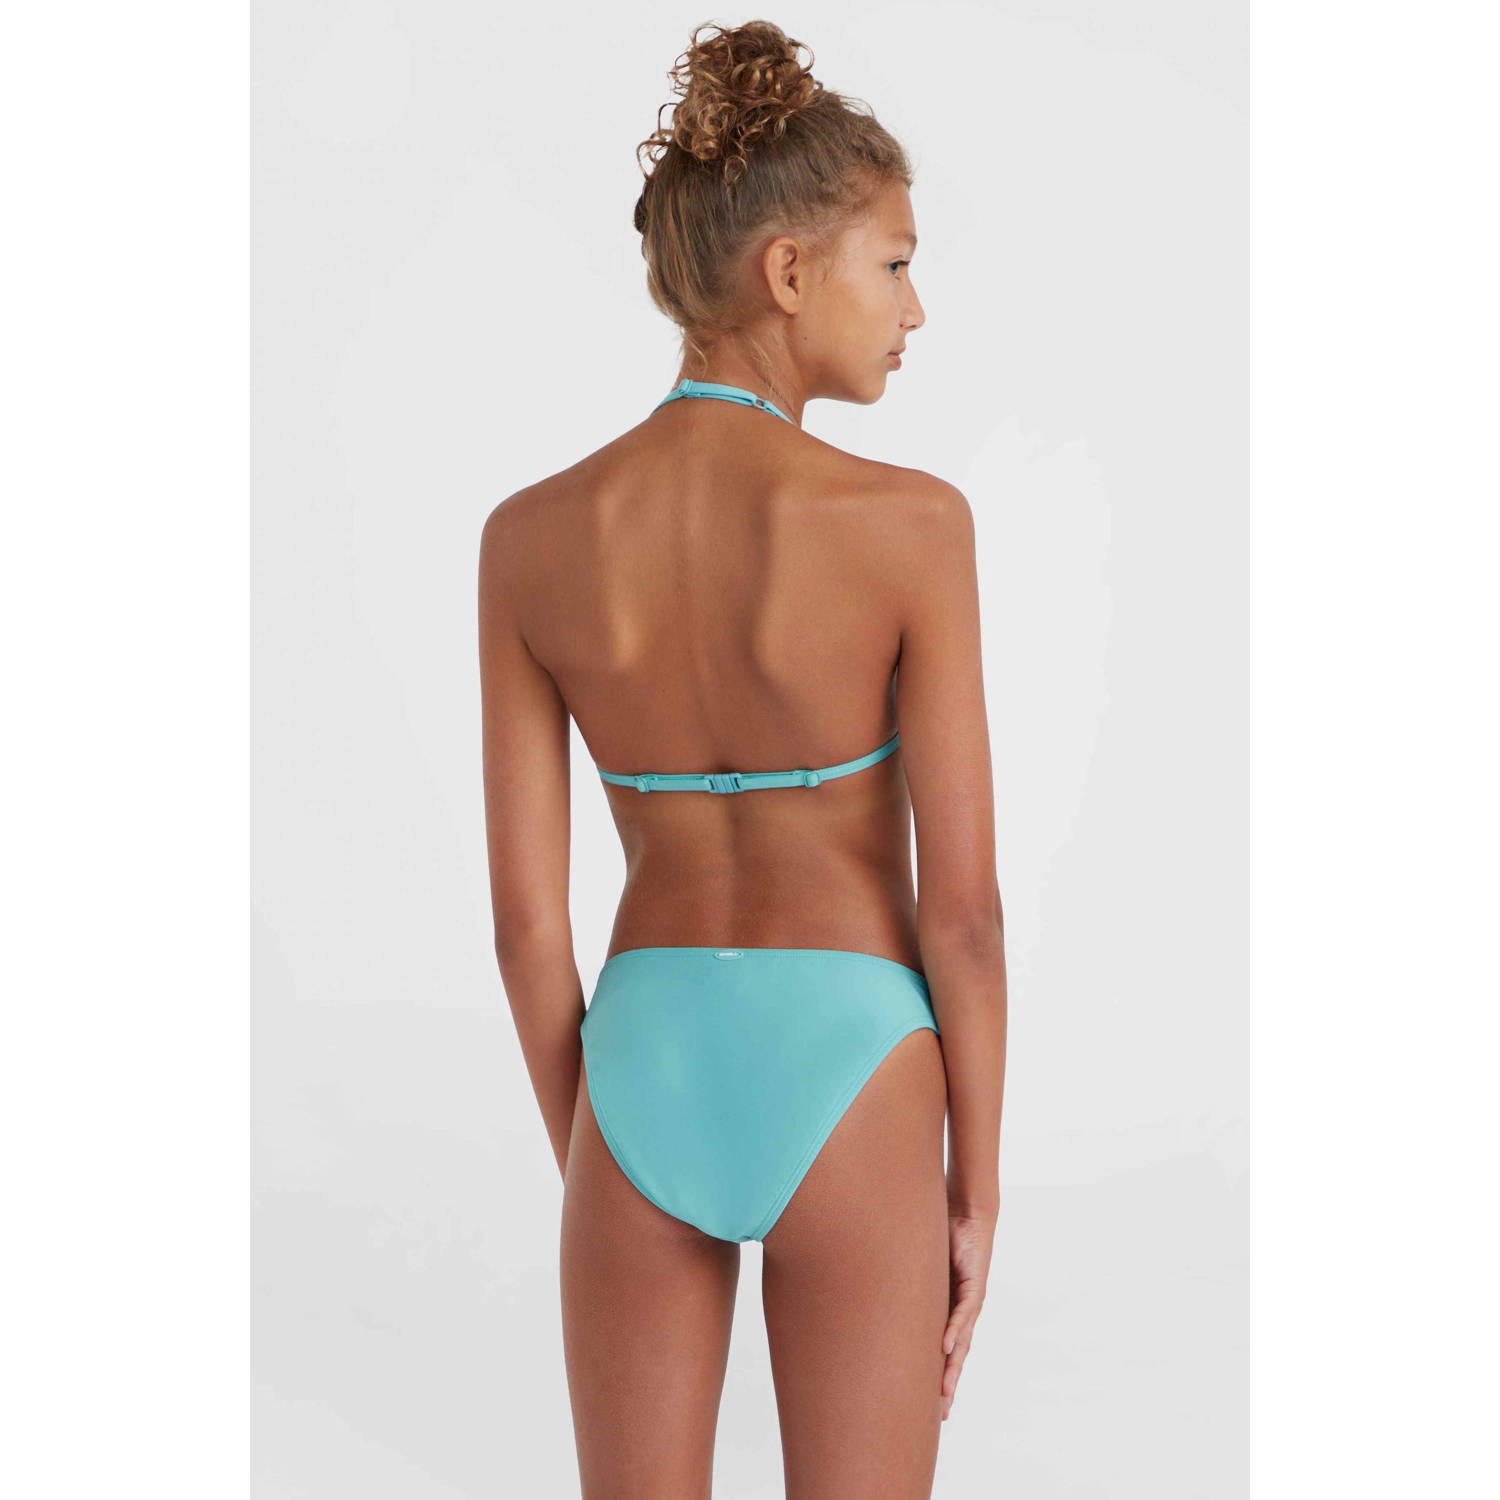 O'Neill triangel bikini Essentials turquoise